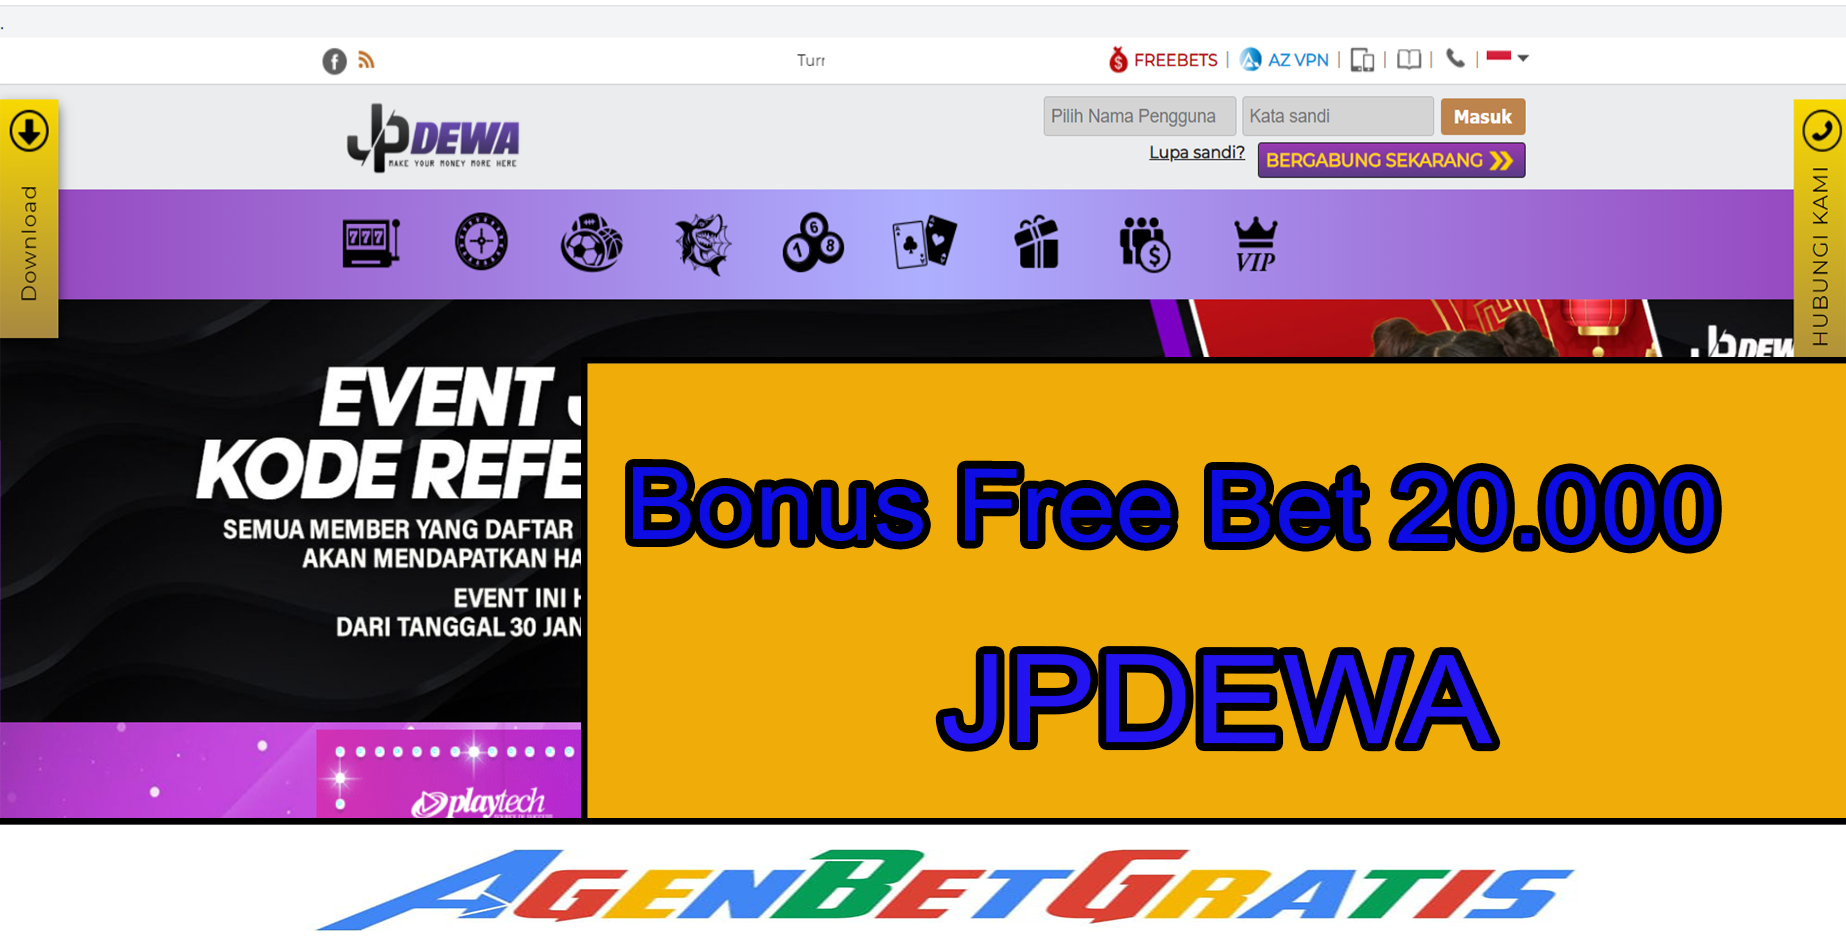 JPDEWA - Bonus FreeBet 20.000